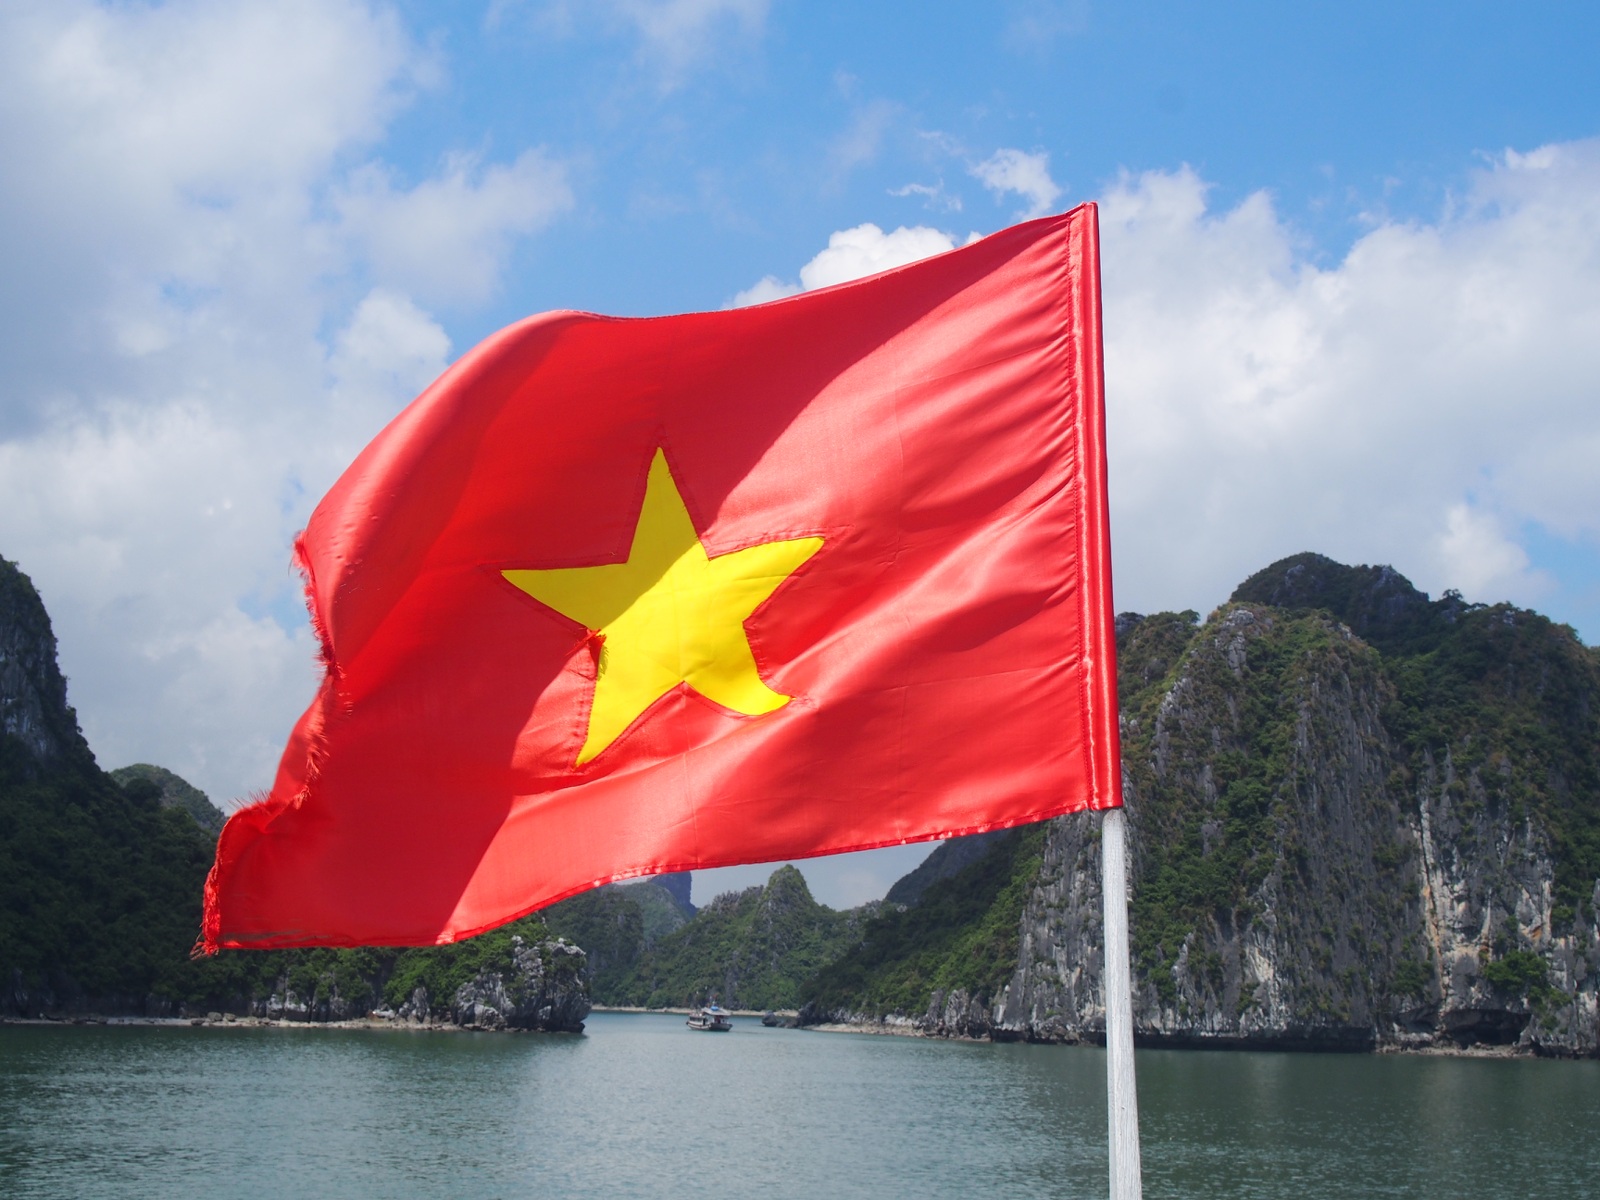 Hello Vietnam!